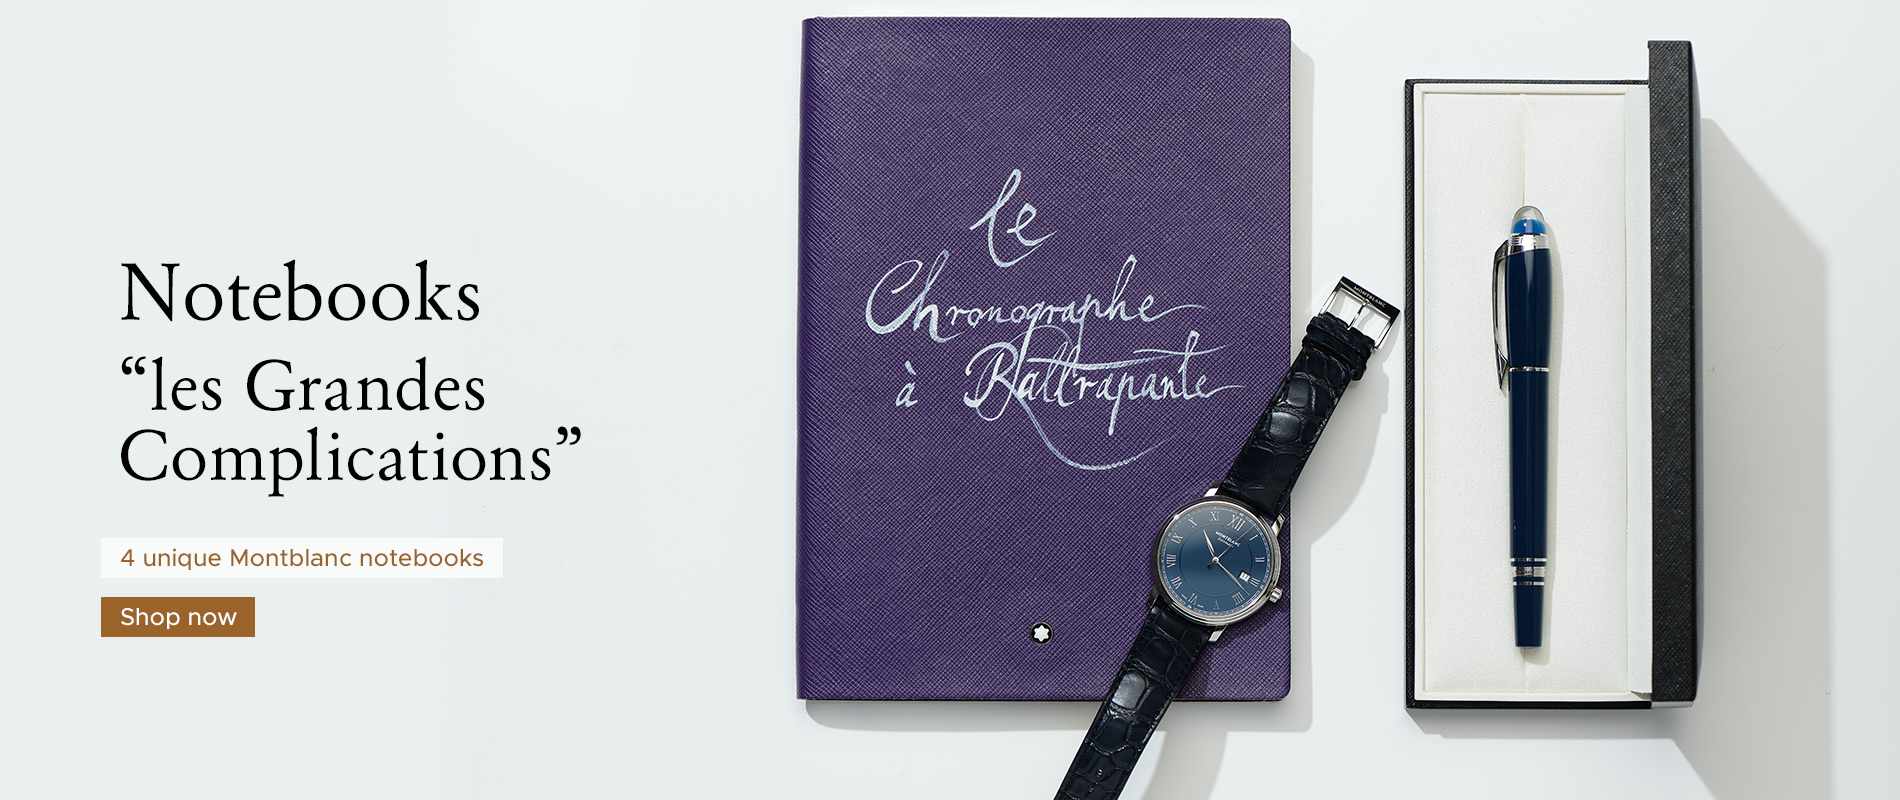 Notebooks ‘les Grandes Complications’